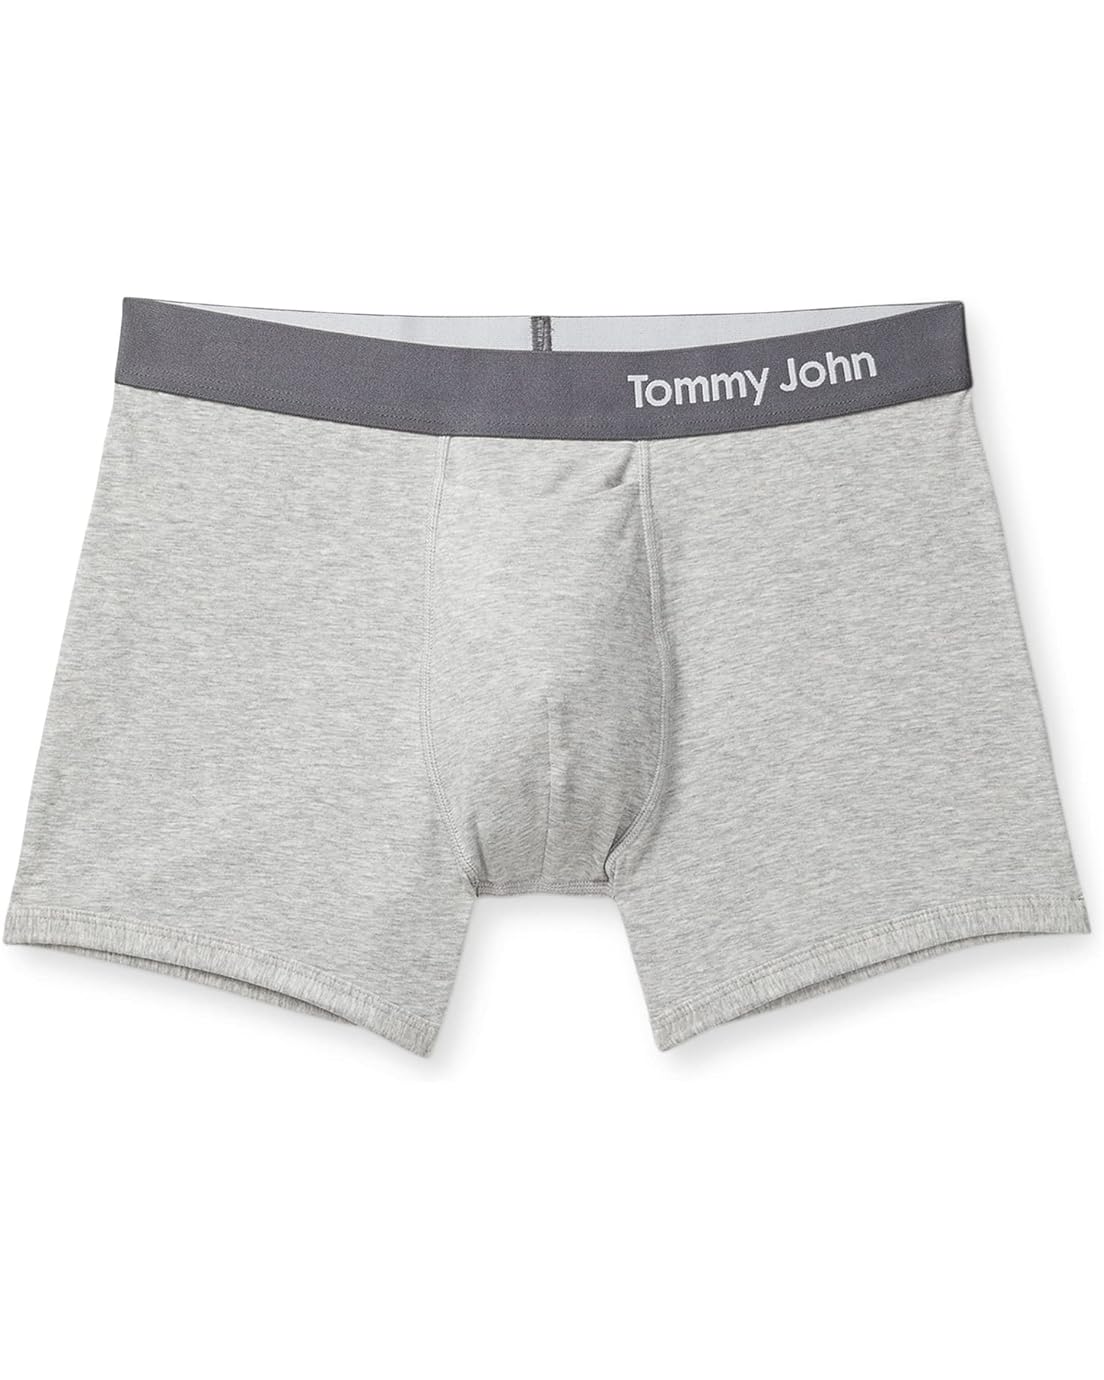  Tommy John Cool Cotton Trunks 4